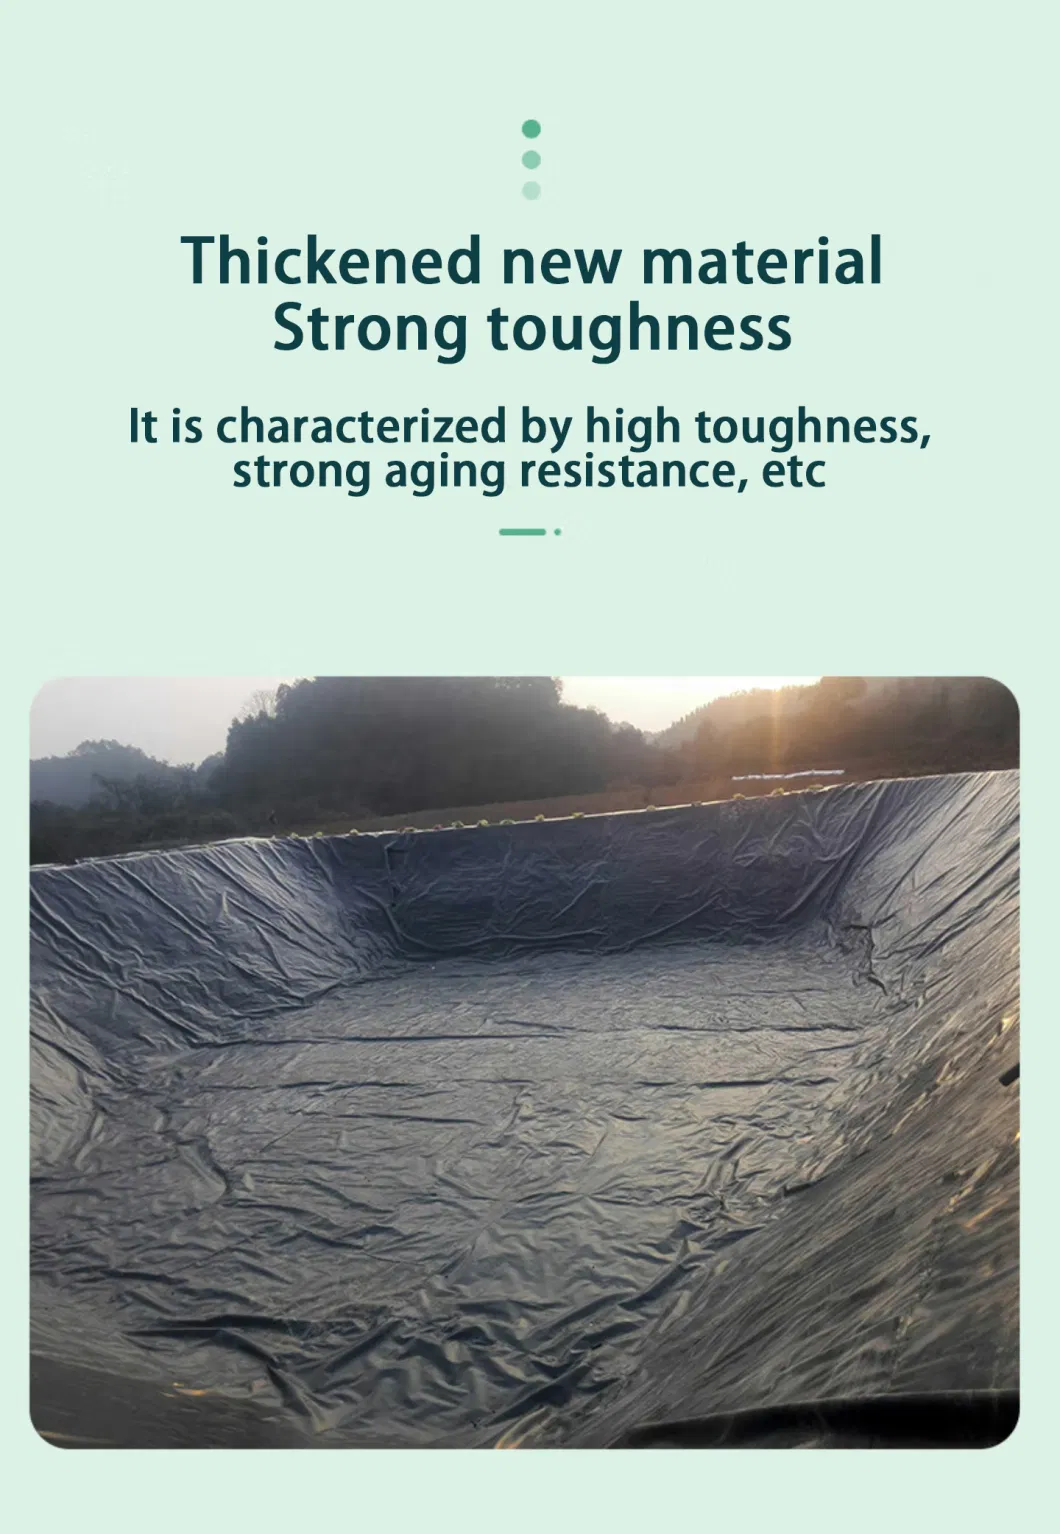 HDPE PVC 1mm Dam Pond Liner Landfill Biodigester Liners Geomembrane